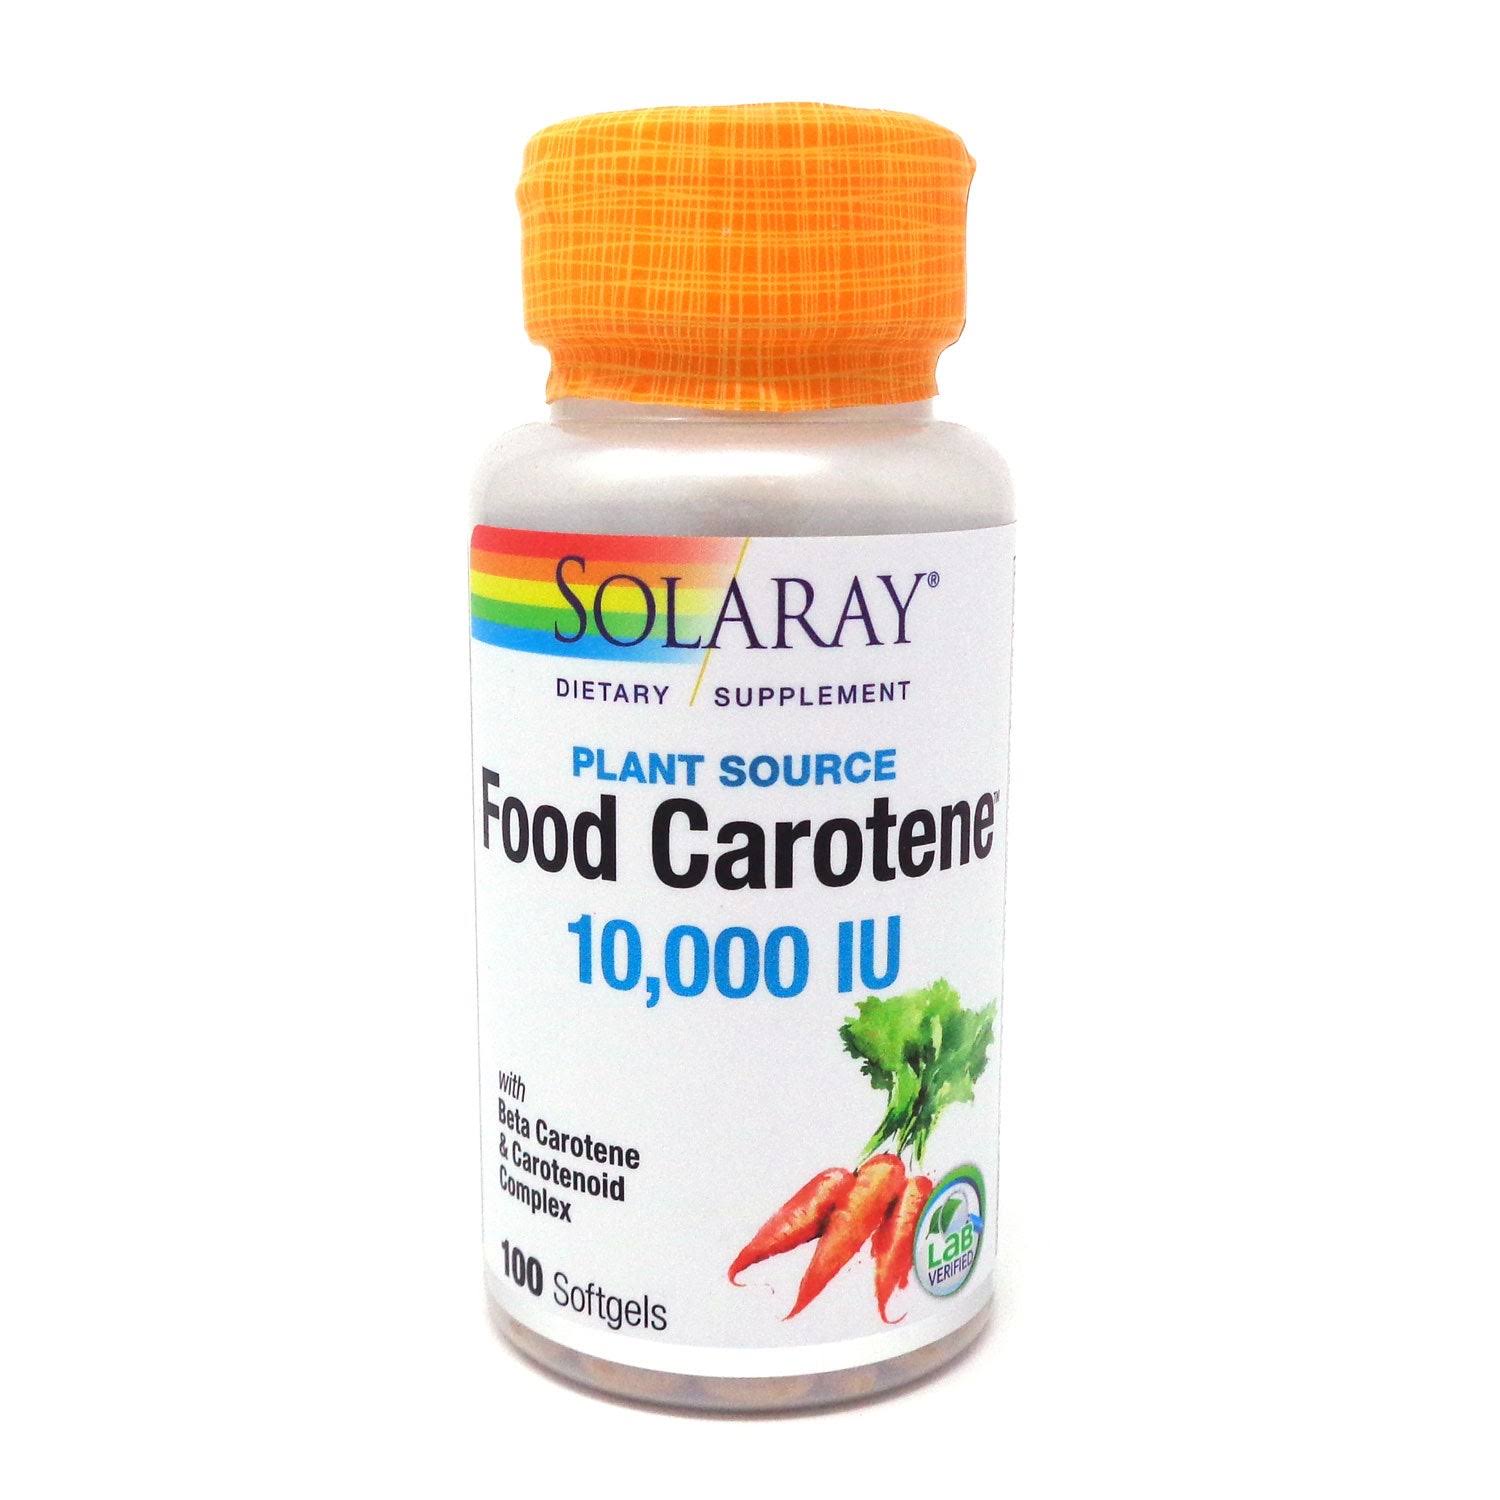 Solaray Food Carotene Supplement - 100 Softgels